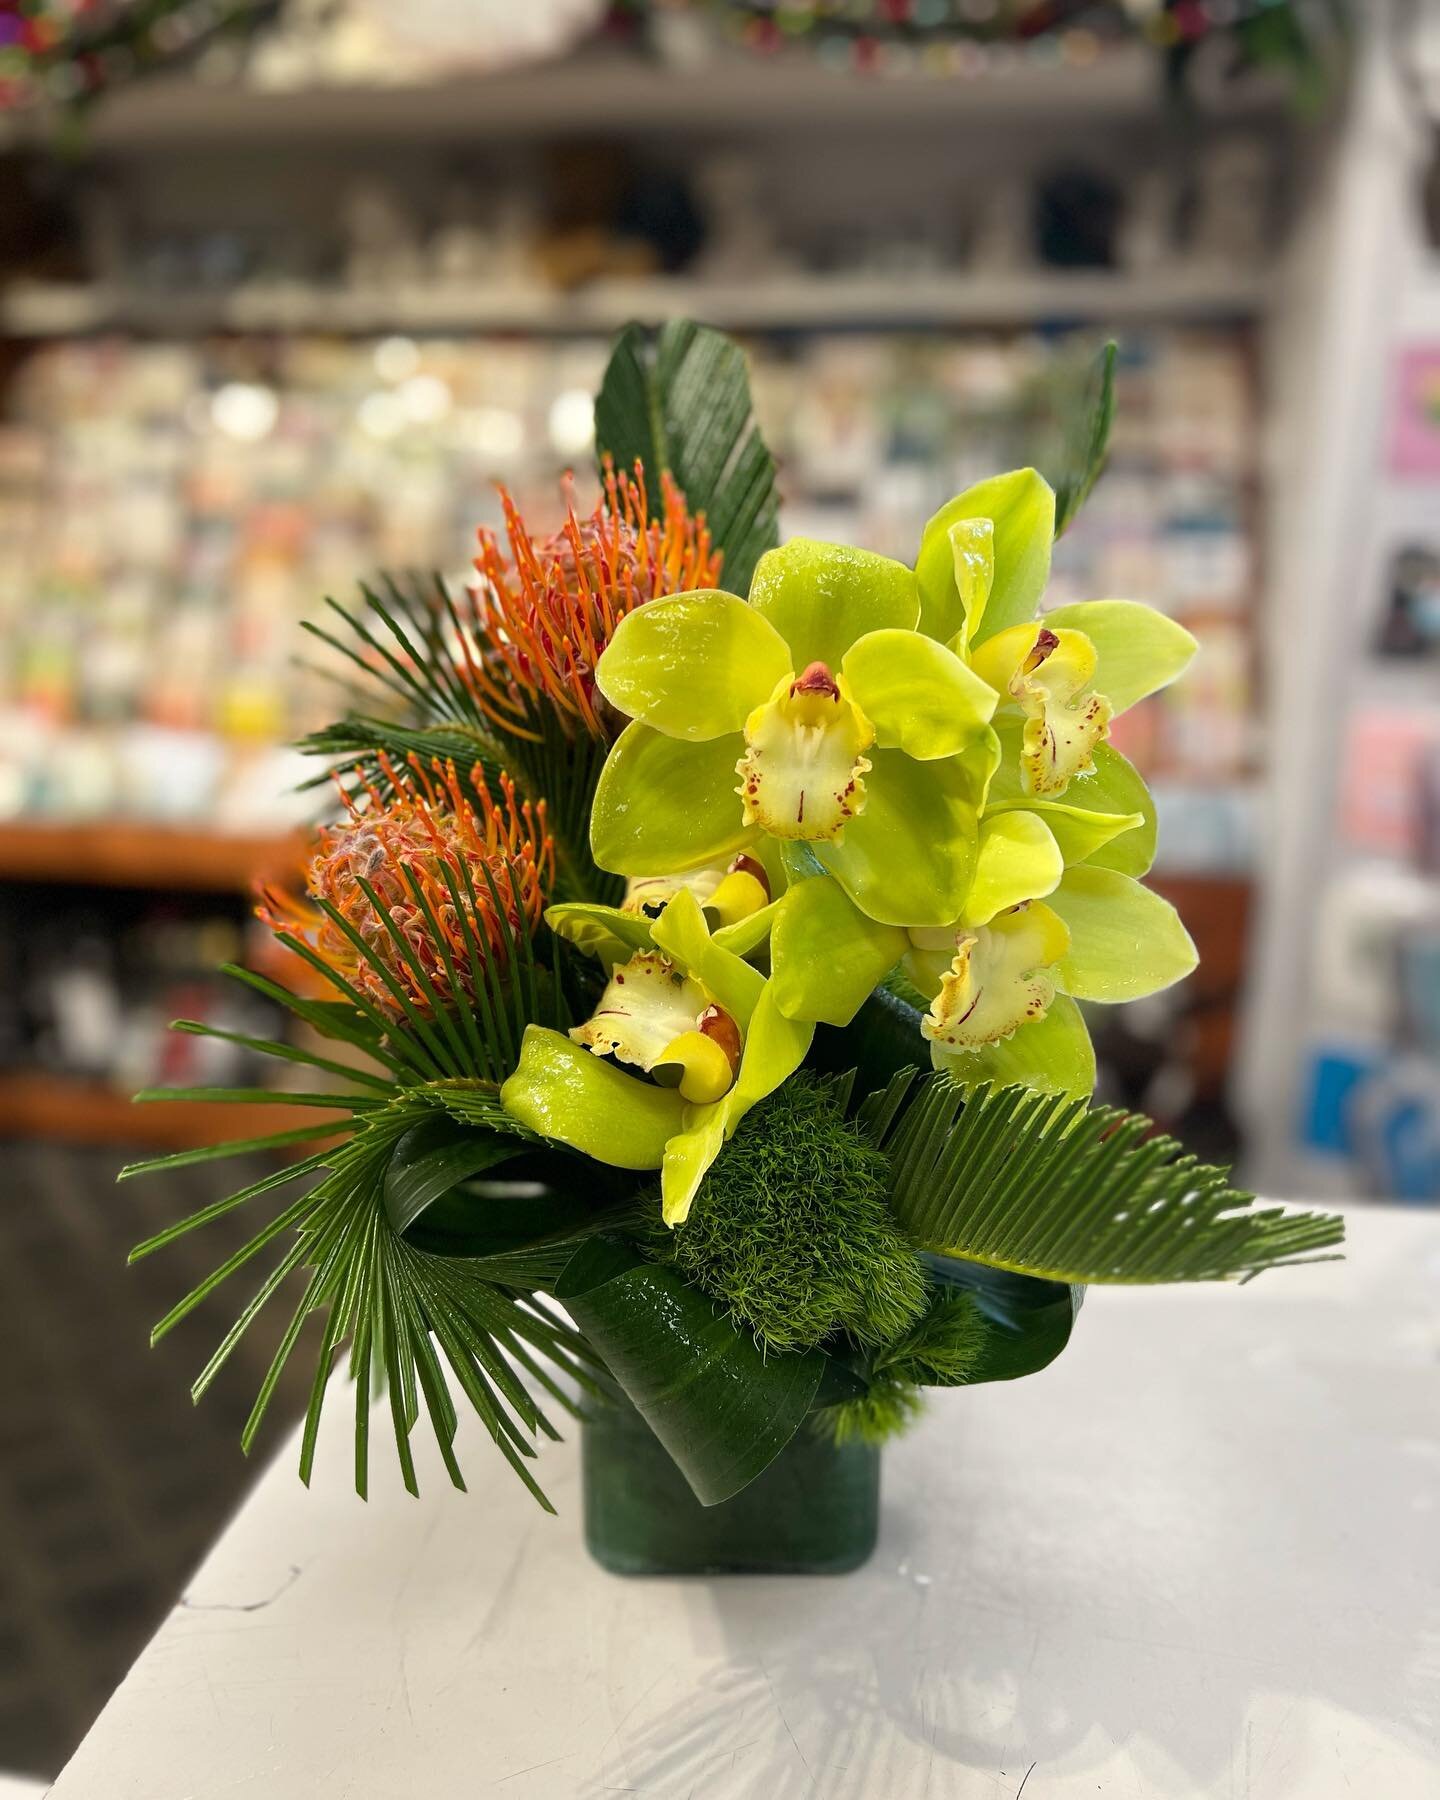 The MOST gorgeous cymbidium orchids and pincushion protea! 😍
.
#orchids #protea #minneapolisflorist #flowersofinstagram #botanicalart #botanicalartist #flowersofinstagram #instaflowers #flowershop #tropicalflowers #mpls